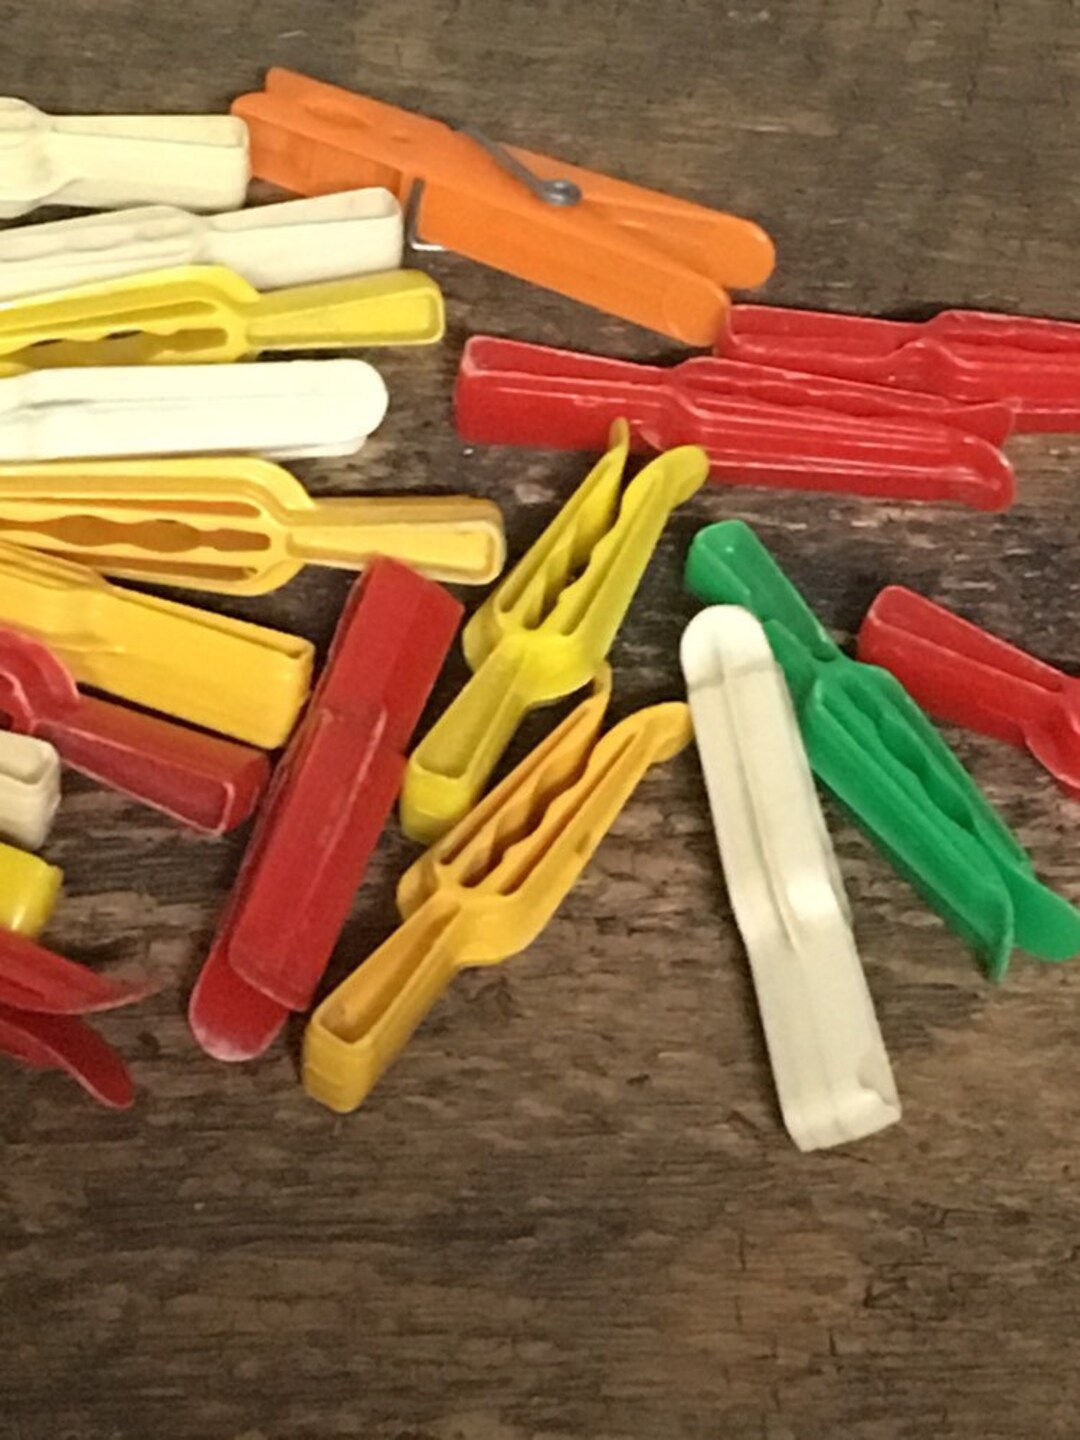 Colored Mini Clothespins, Small Colored Clothespins, 1 3/8 Inch  Clothespins, Wedding Decor, Craft Clothespins, Pretty Clothespins, 10 Count  